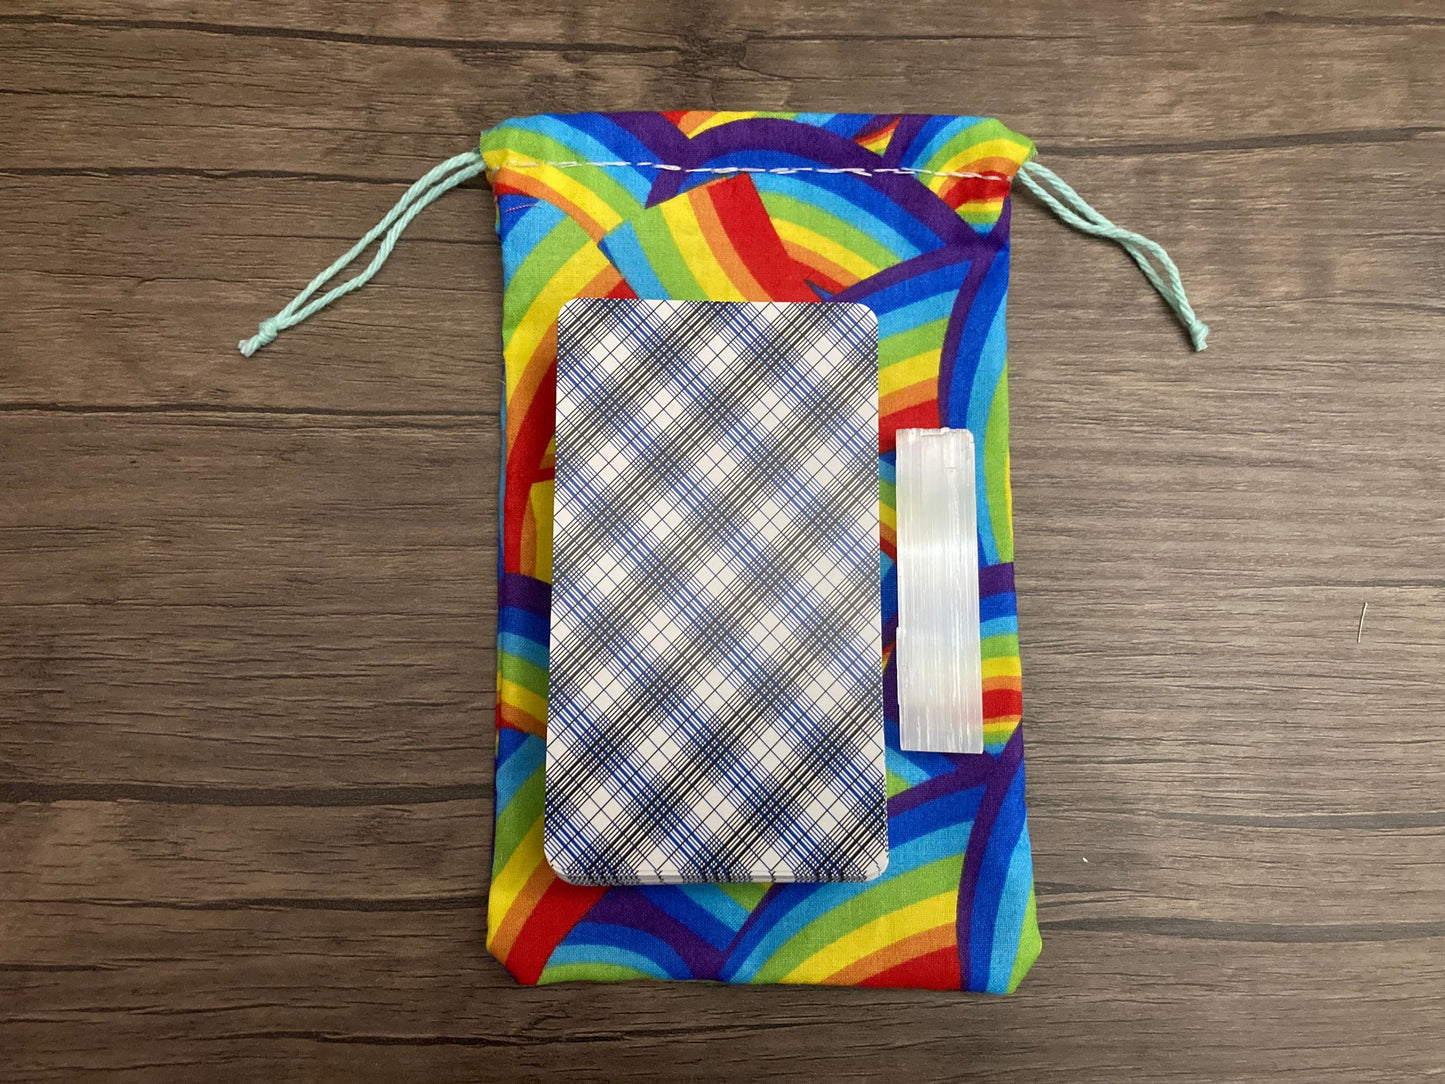 Handmade Cotton Tarot Bag (For Charity #1 Rainbows)